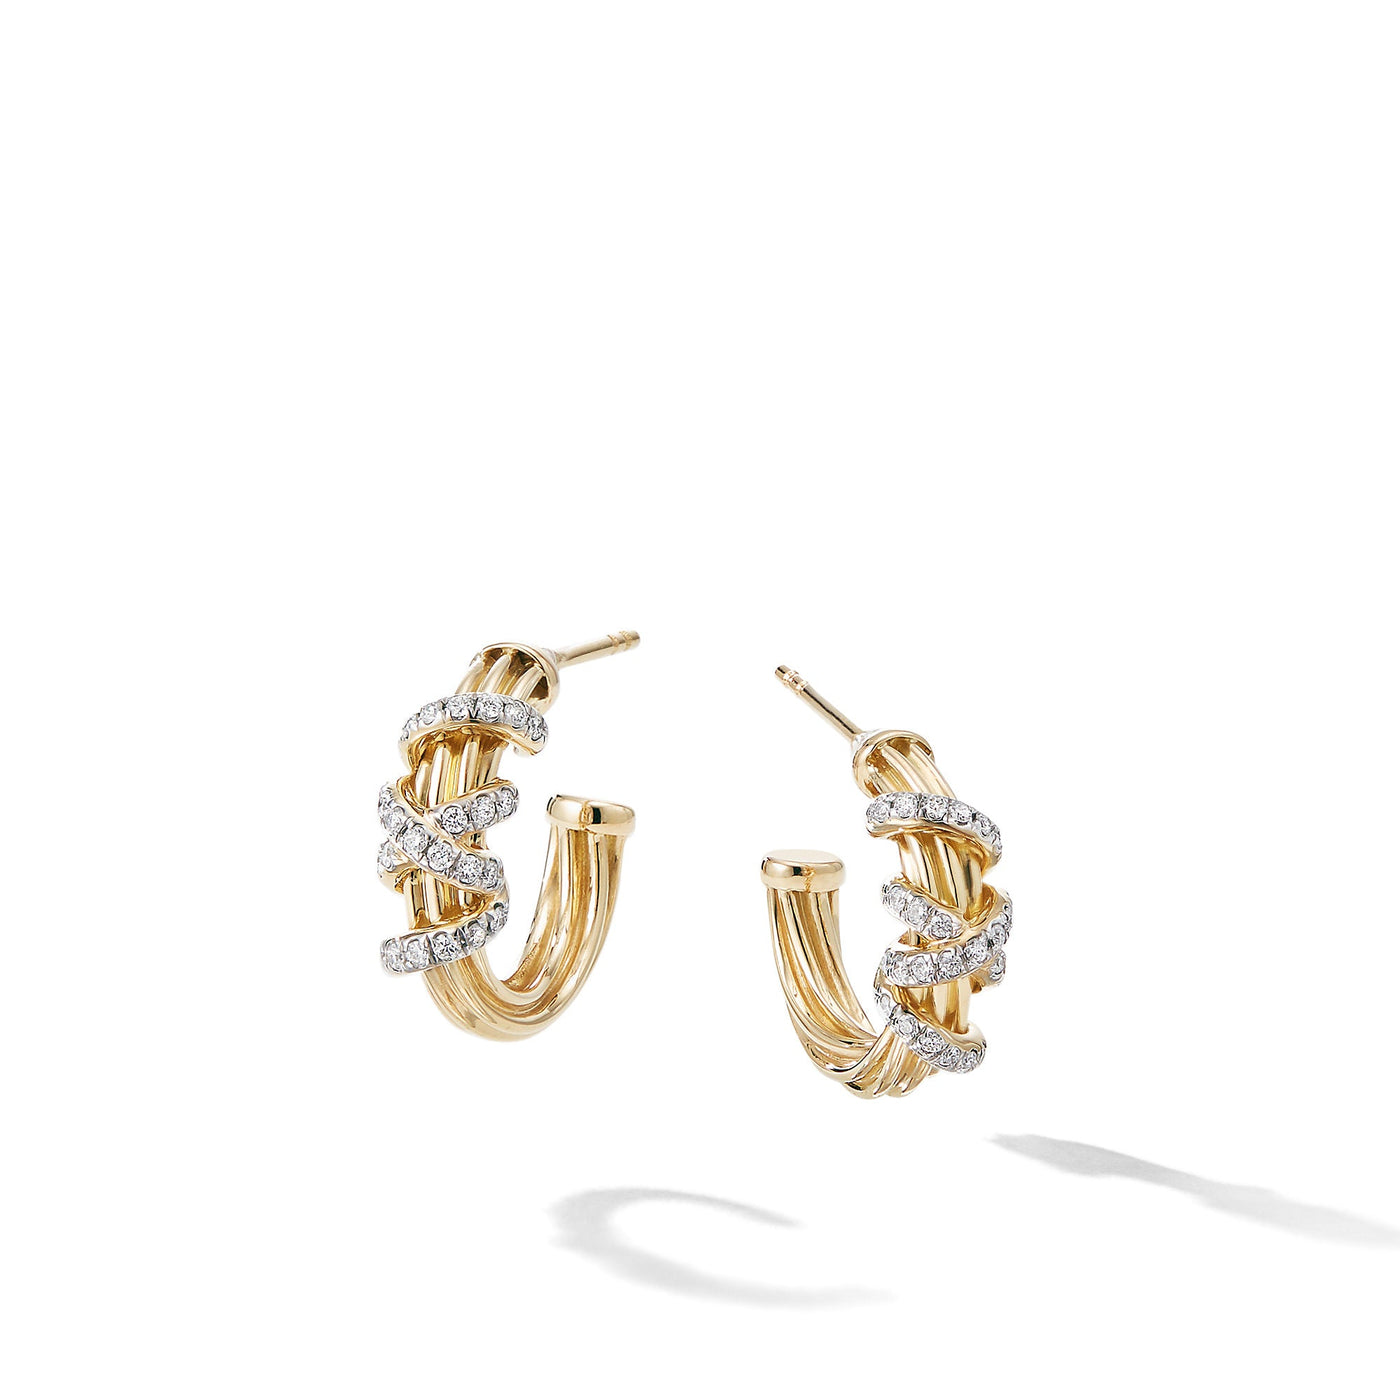 Helena Hoop Earrings in 18K Yellow Gold with Diamonds\, 17mm